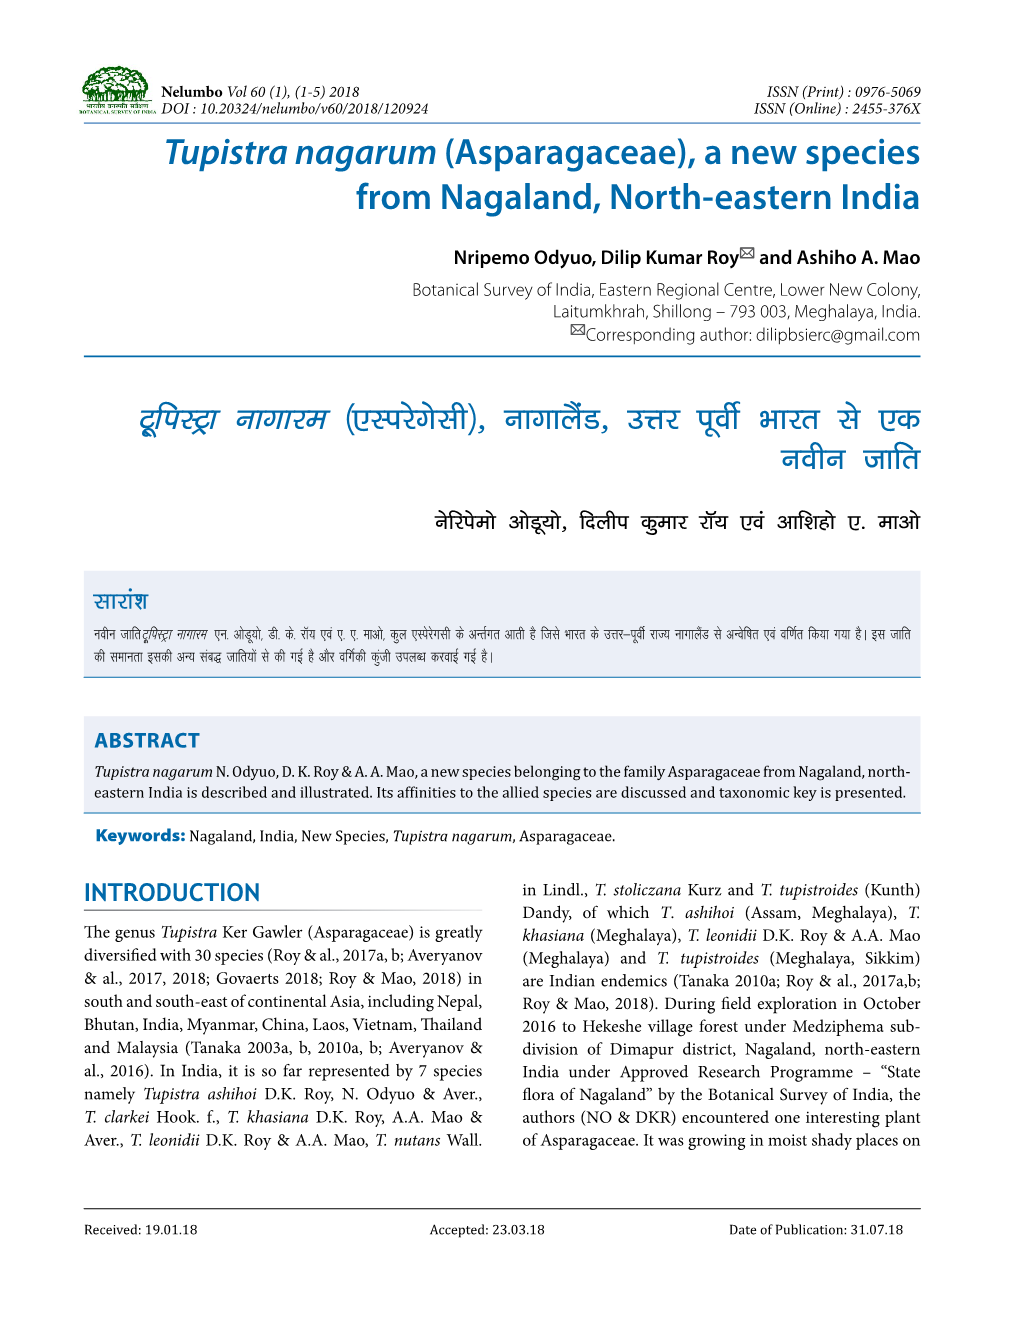 Tupistra Nagarum (Asparagaceae), a New Species from Nagaland, North-Eastern India